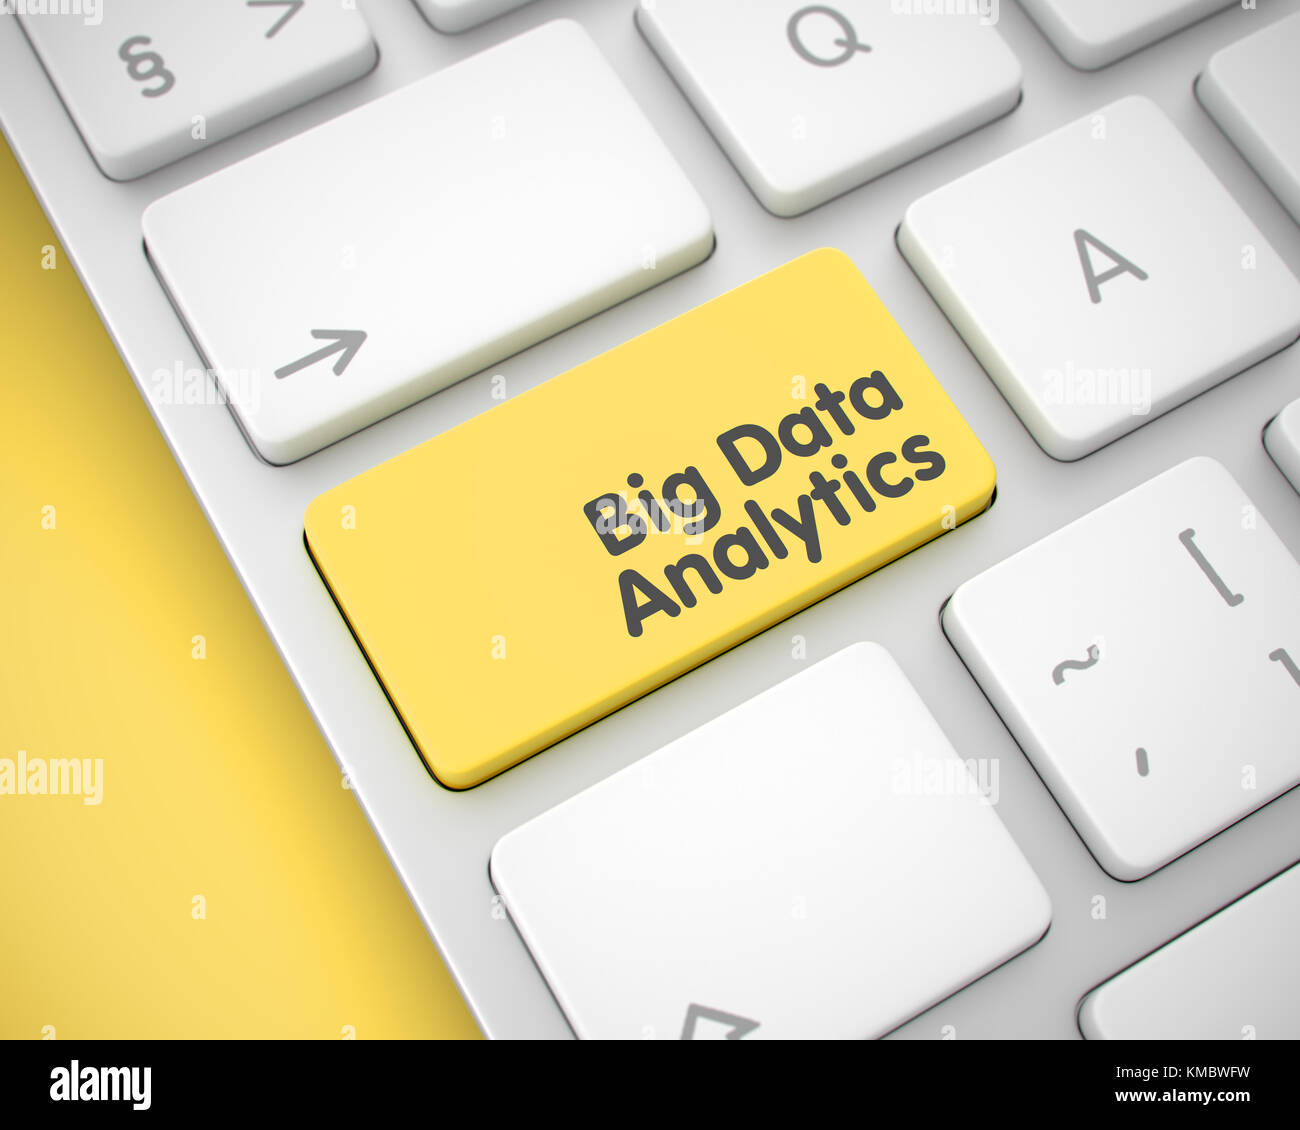 Big Data Analytics on the Yellow Keyboard Button. 3d. Stock Photo